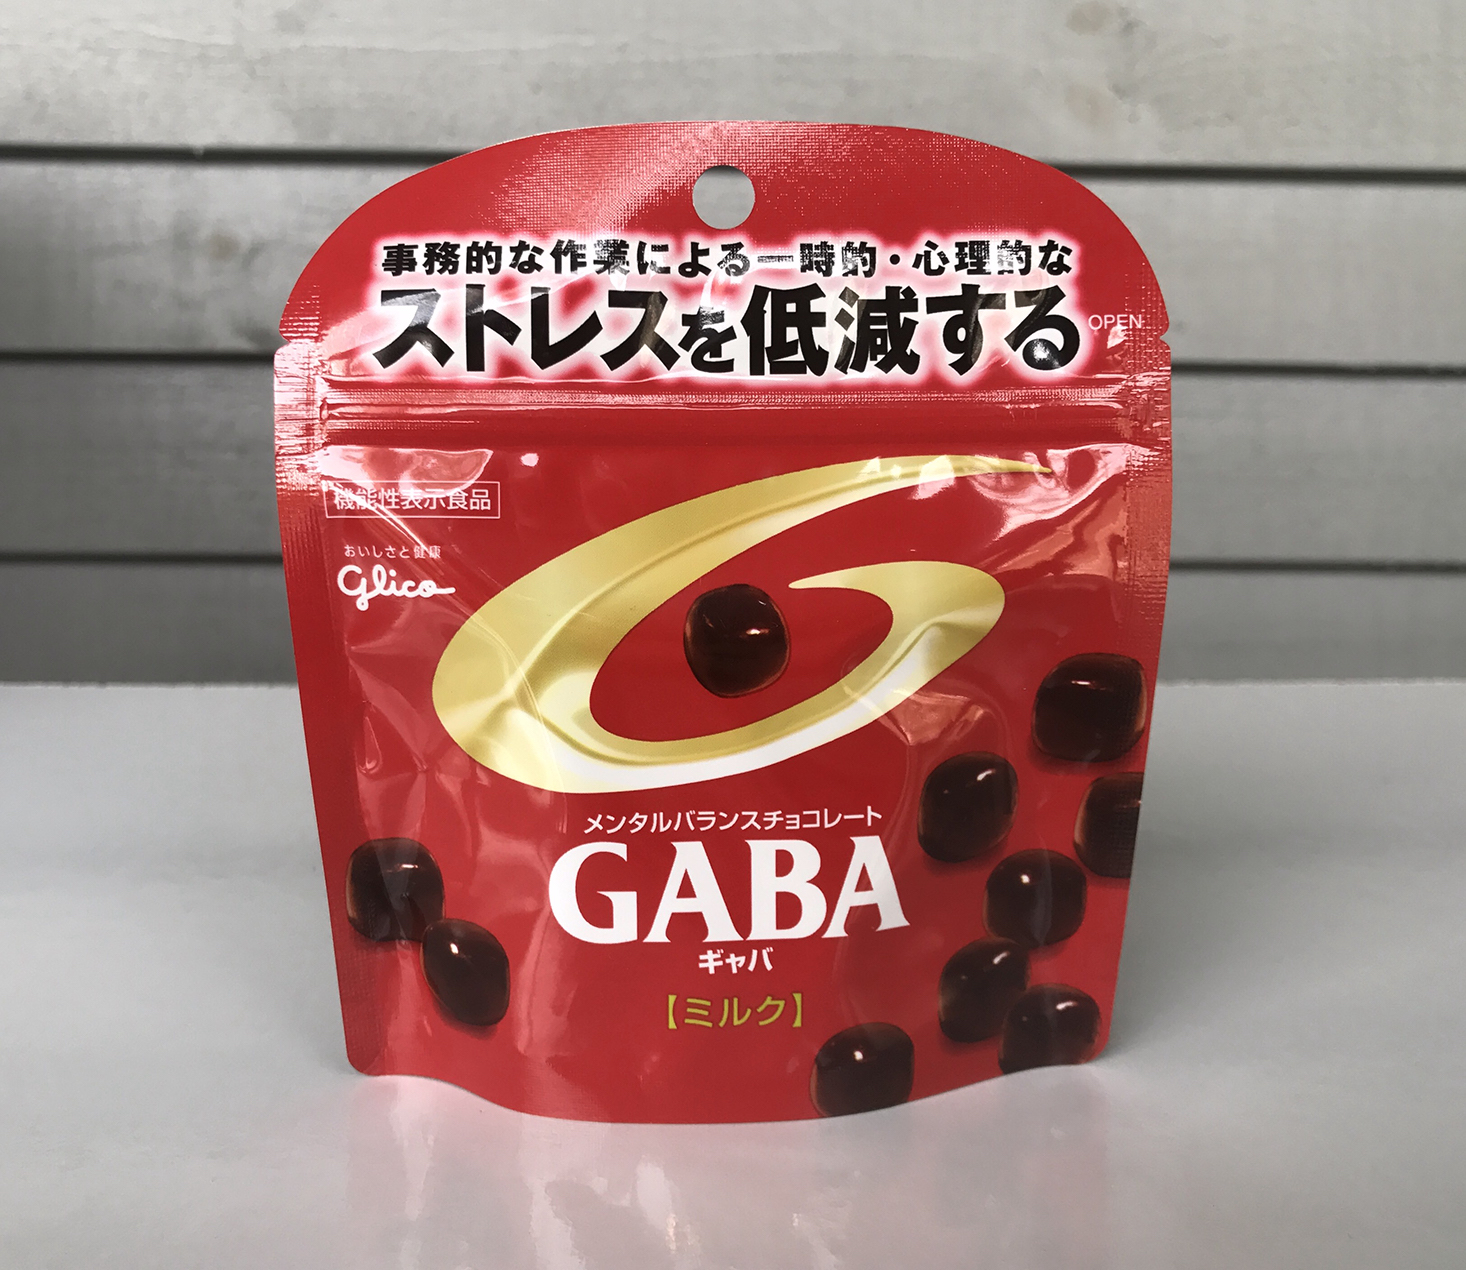 WOWBOX-Fun-and-Tasty-December-2016-Gaba-Chocolate